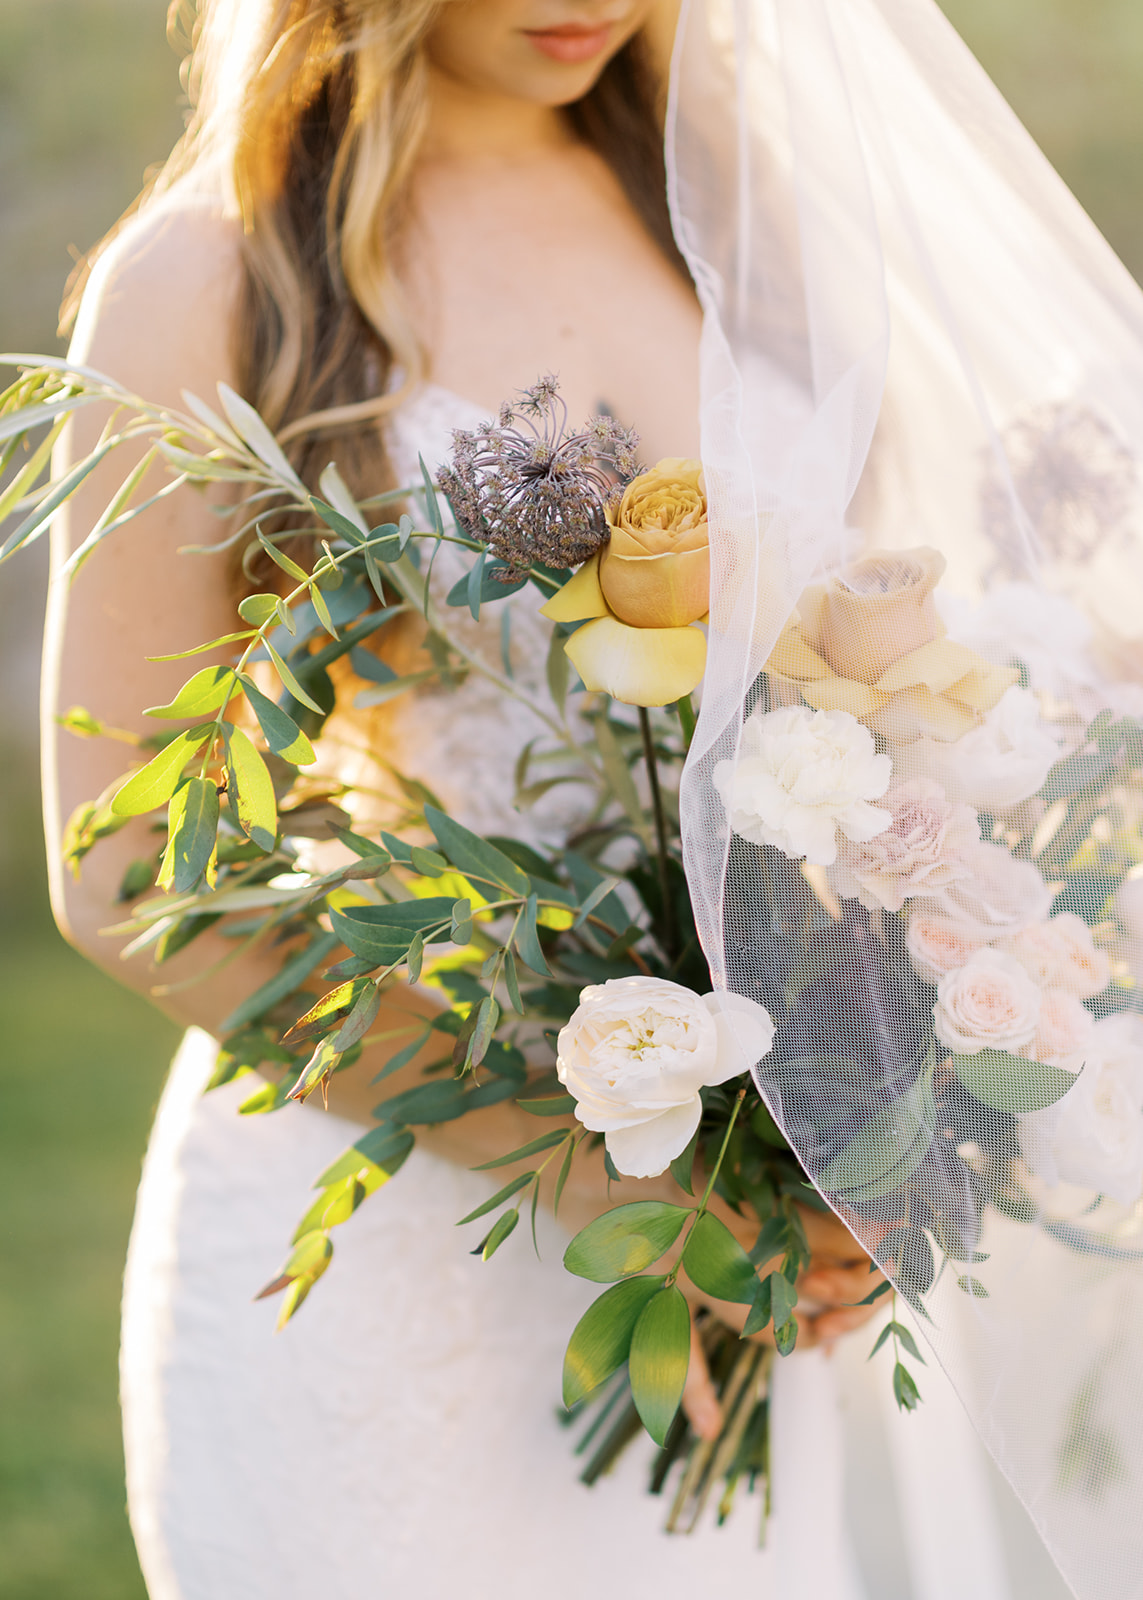 Golden roses in this bridal bouquet inspiraiton